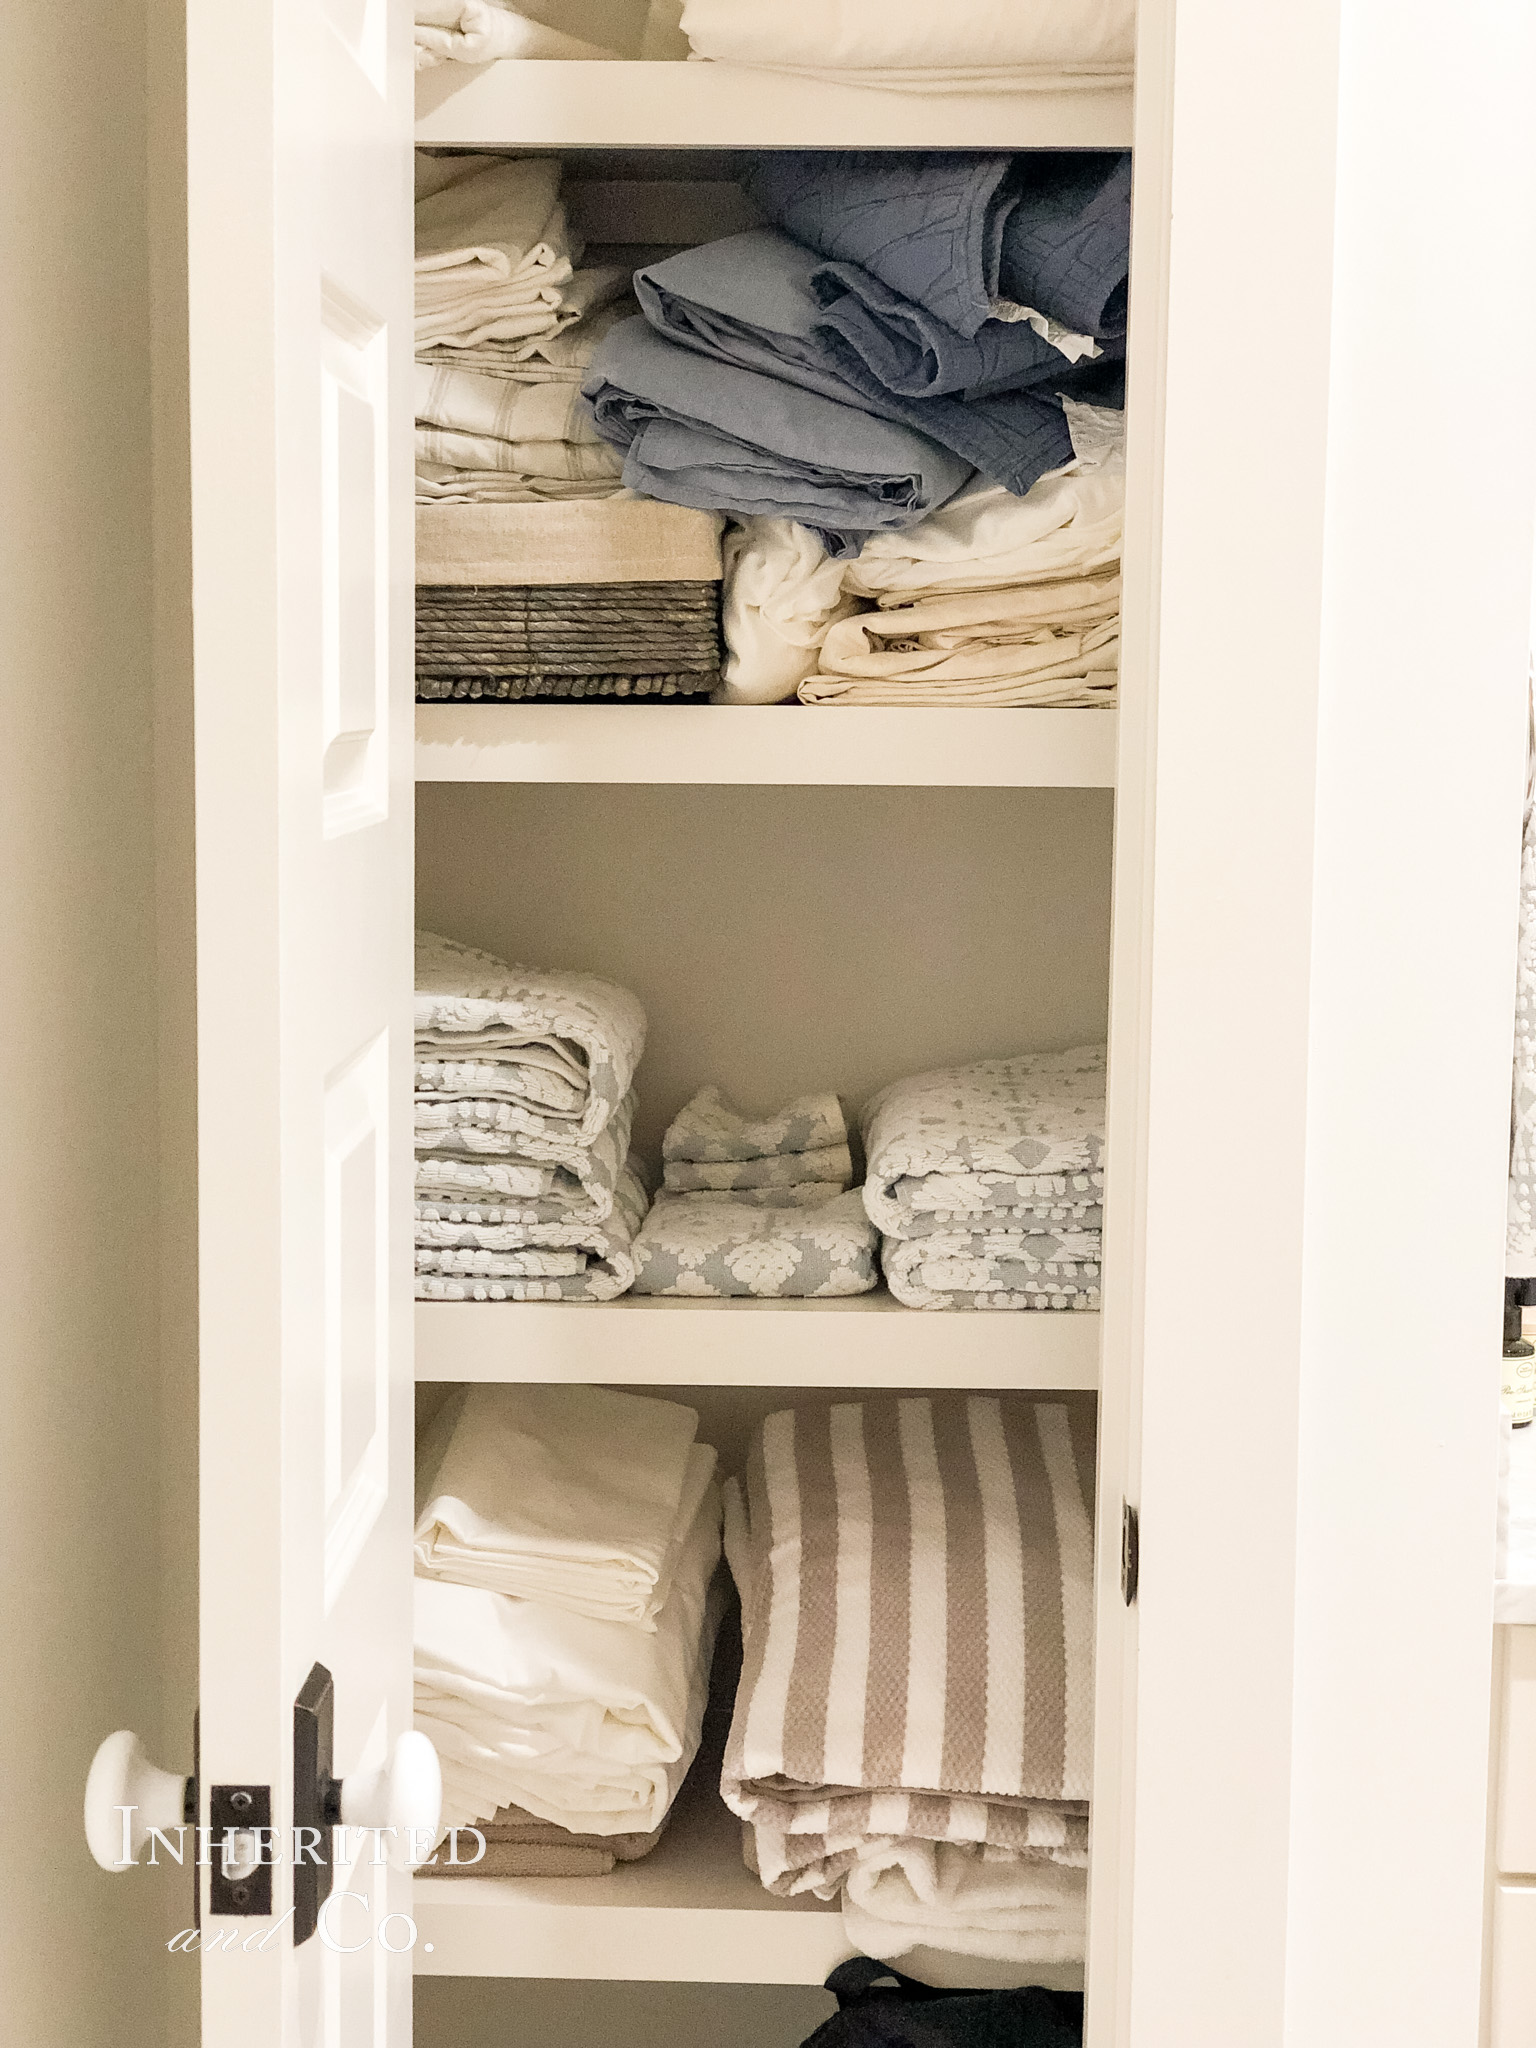 Disorganized shelves in linen closet